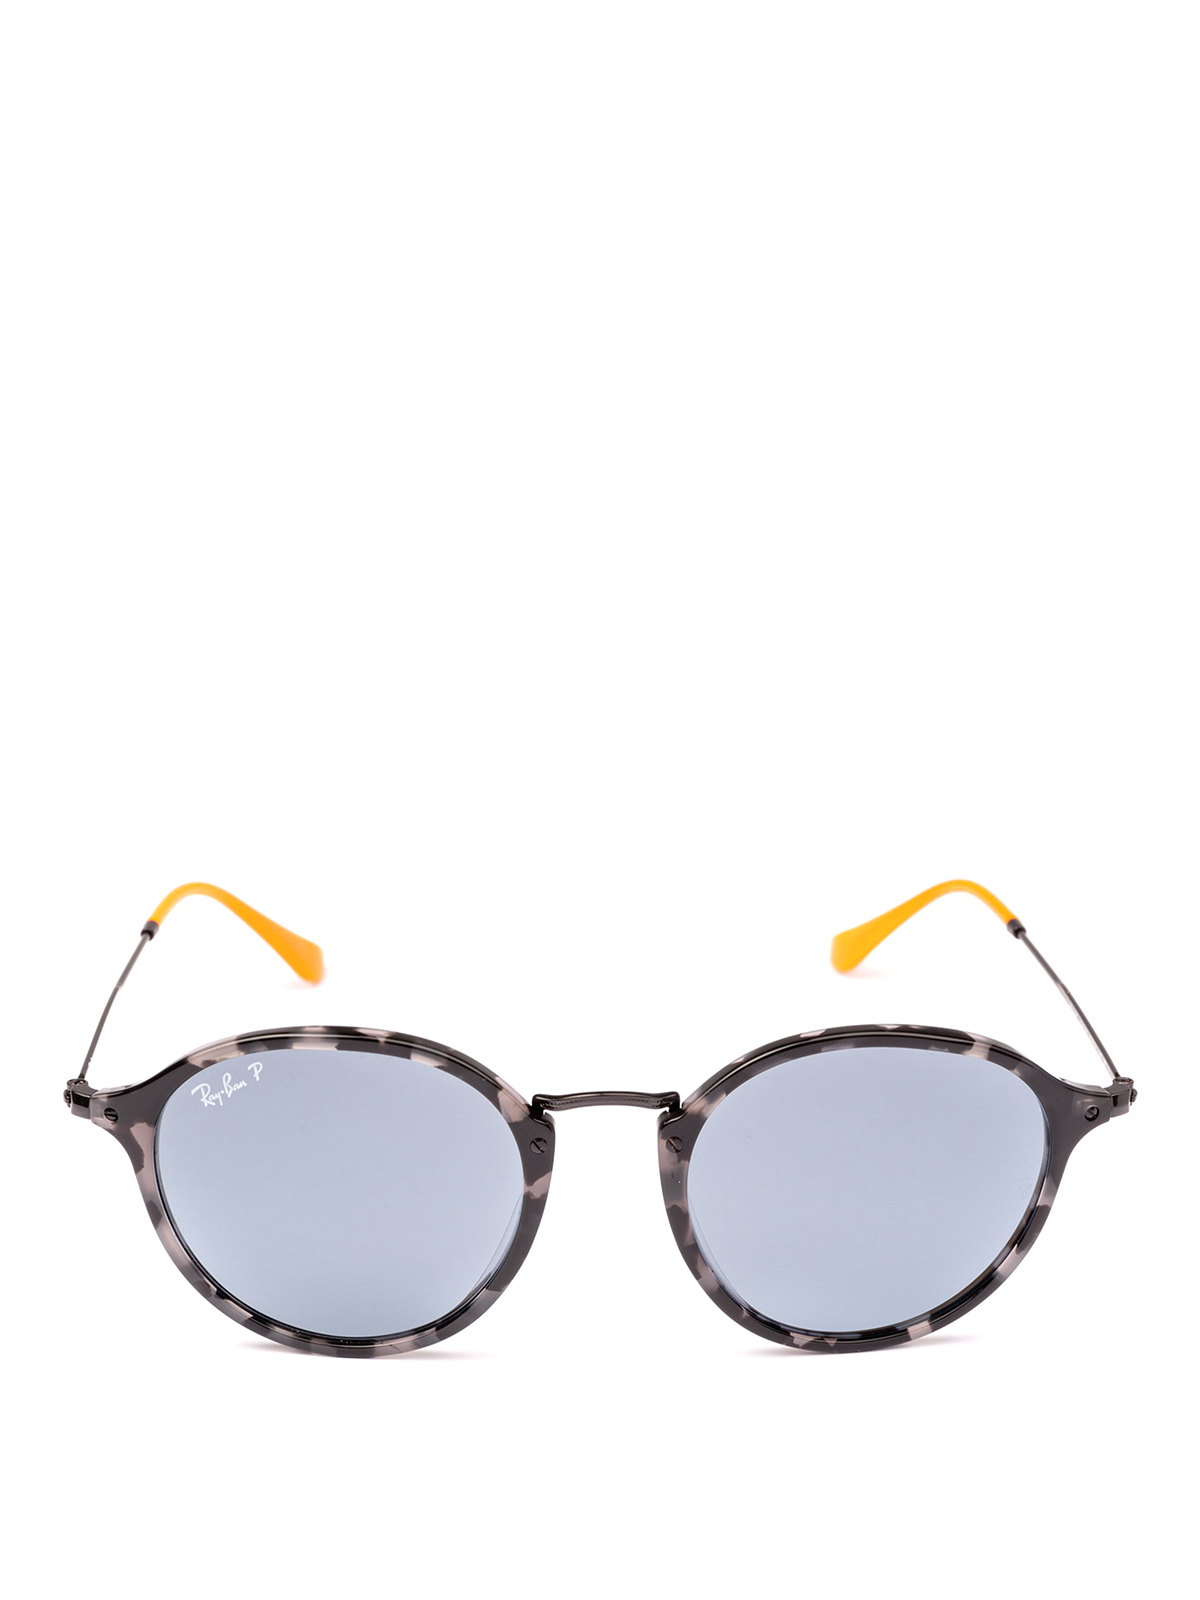 Sunglasses Ray Ban - Tortoise and yellow frame sunglasses - RB2447124652